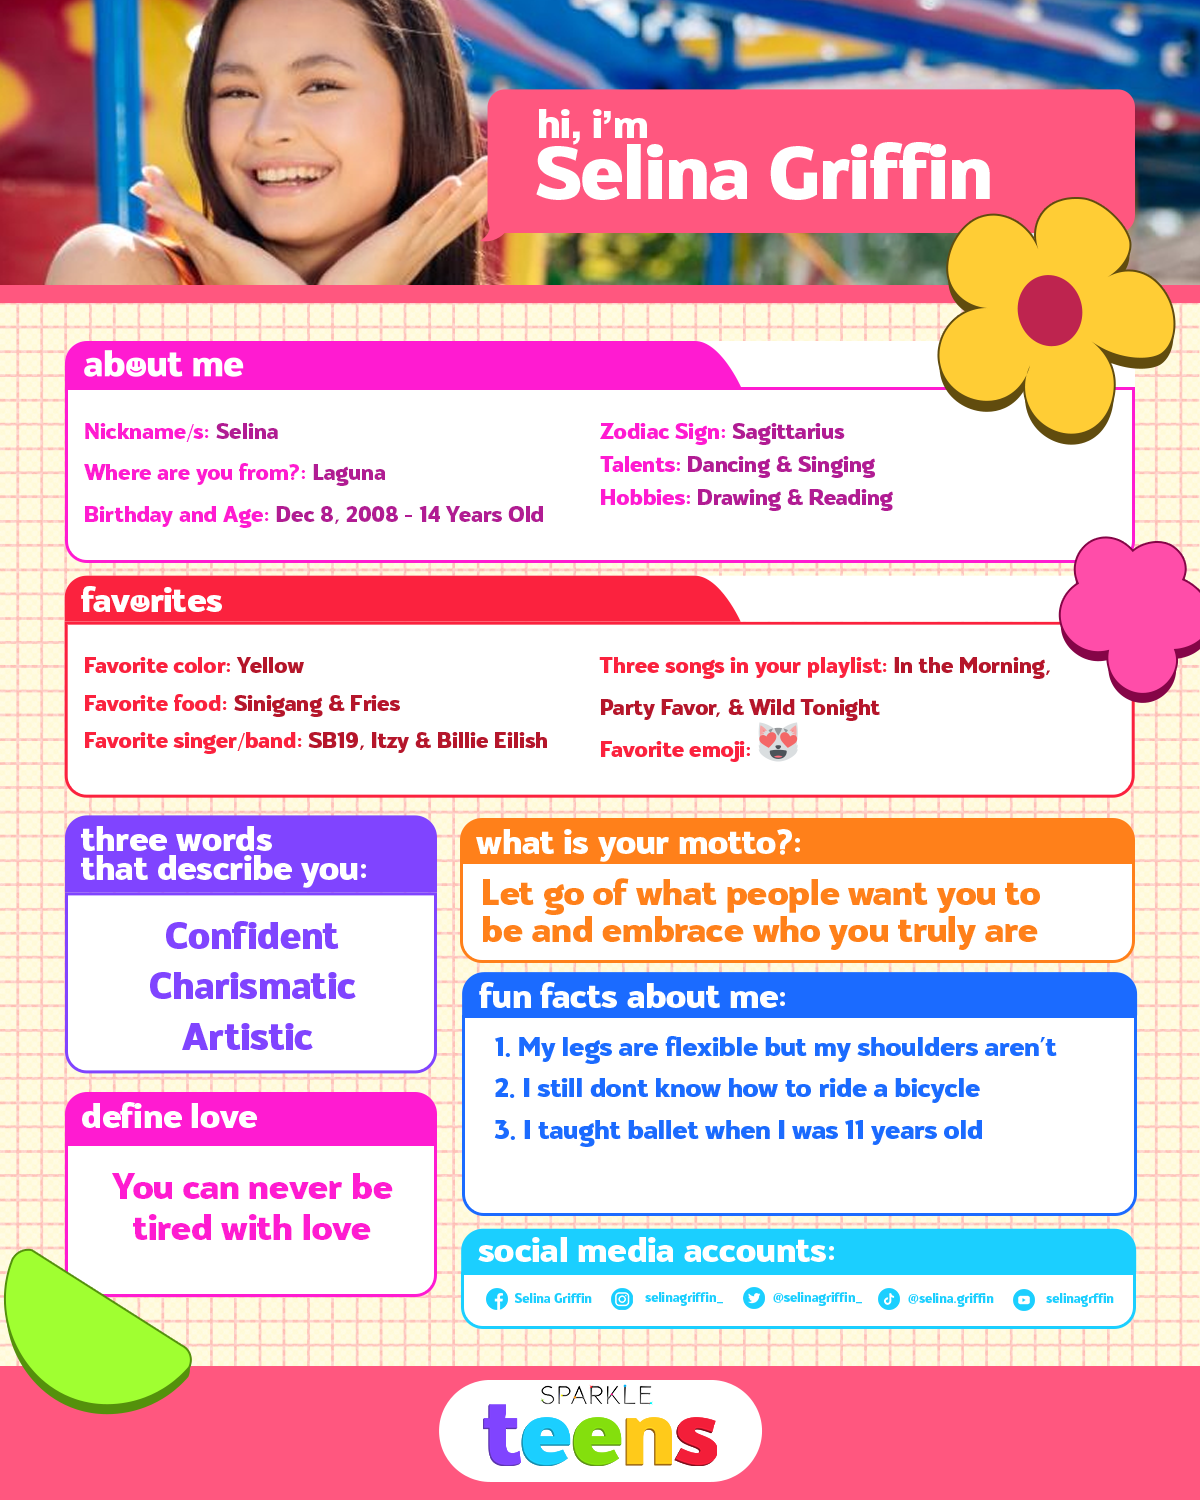 SPARKLE TEENS GMA SELINA GRIFFIN